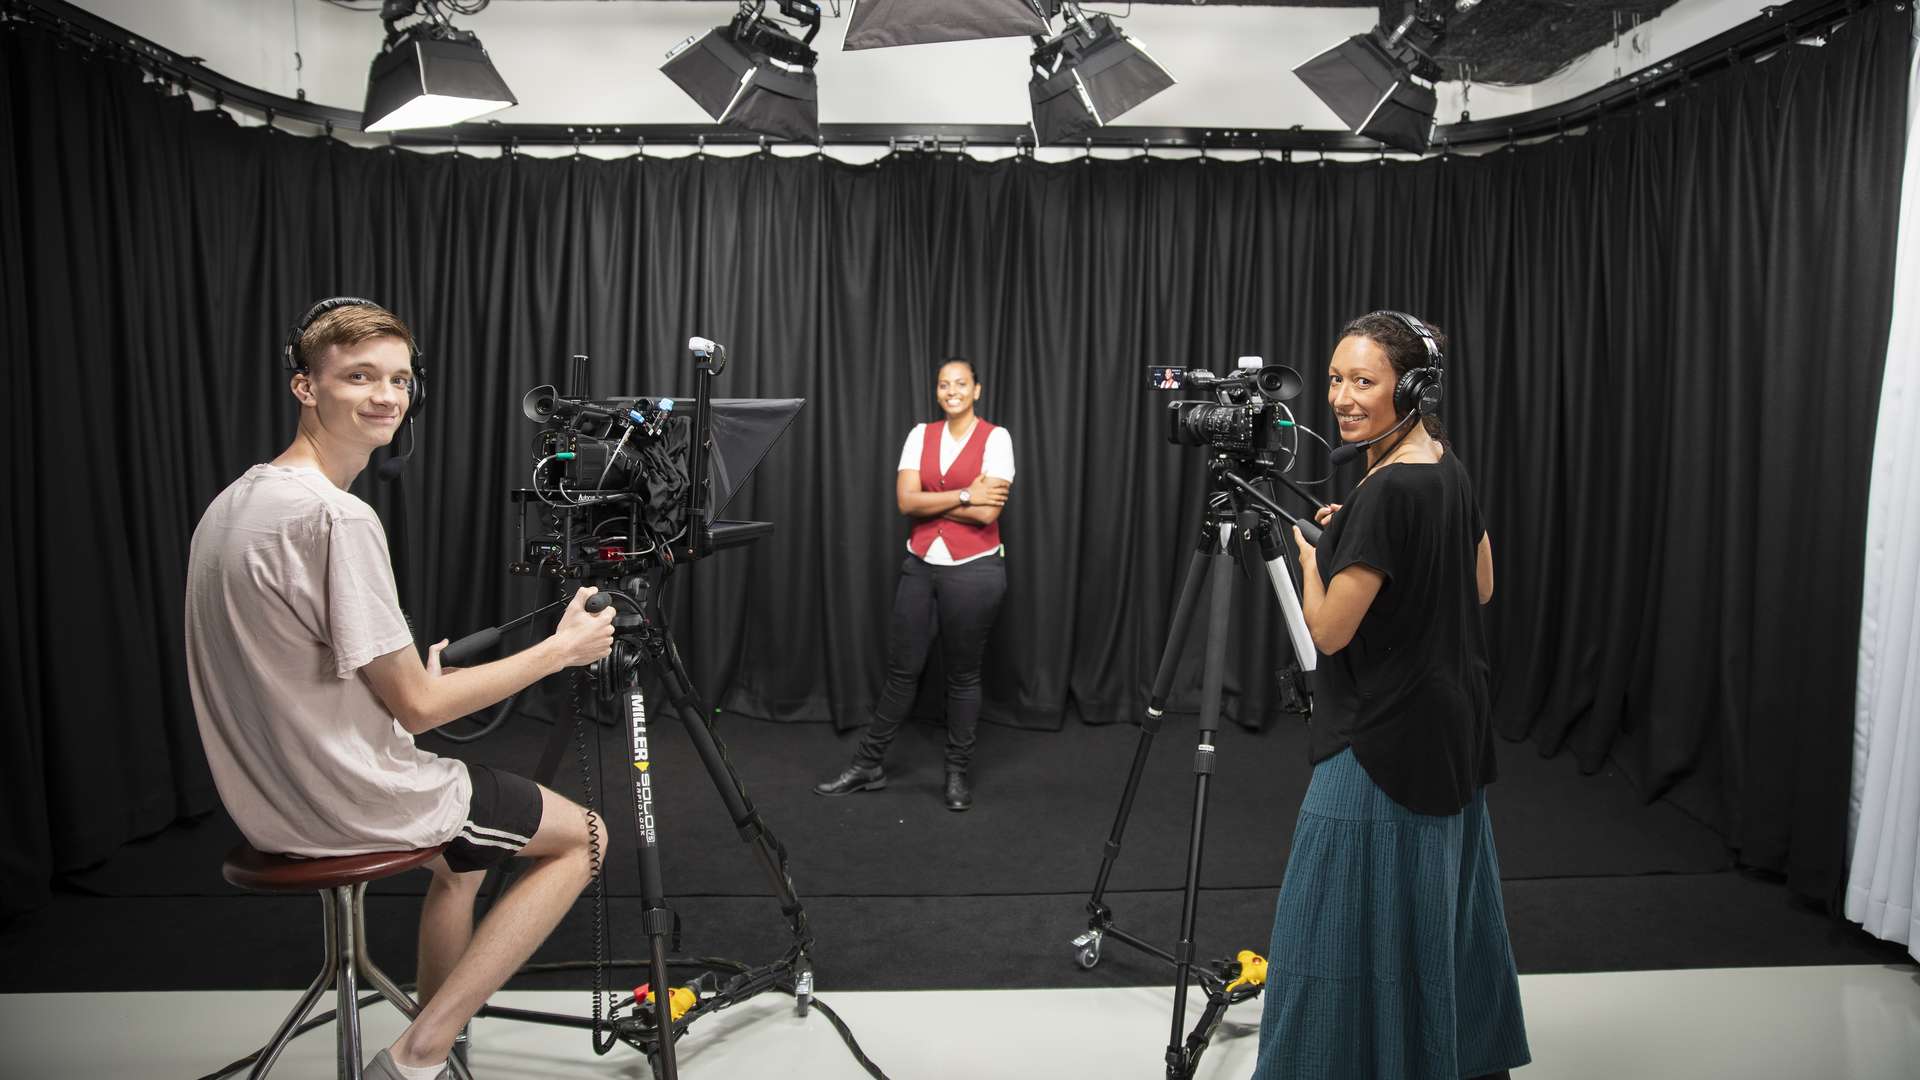 Two digital media students preparing to film someone in a studio.